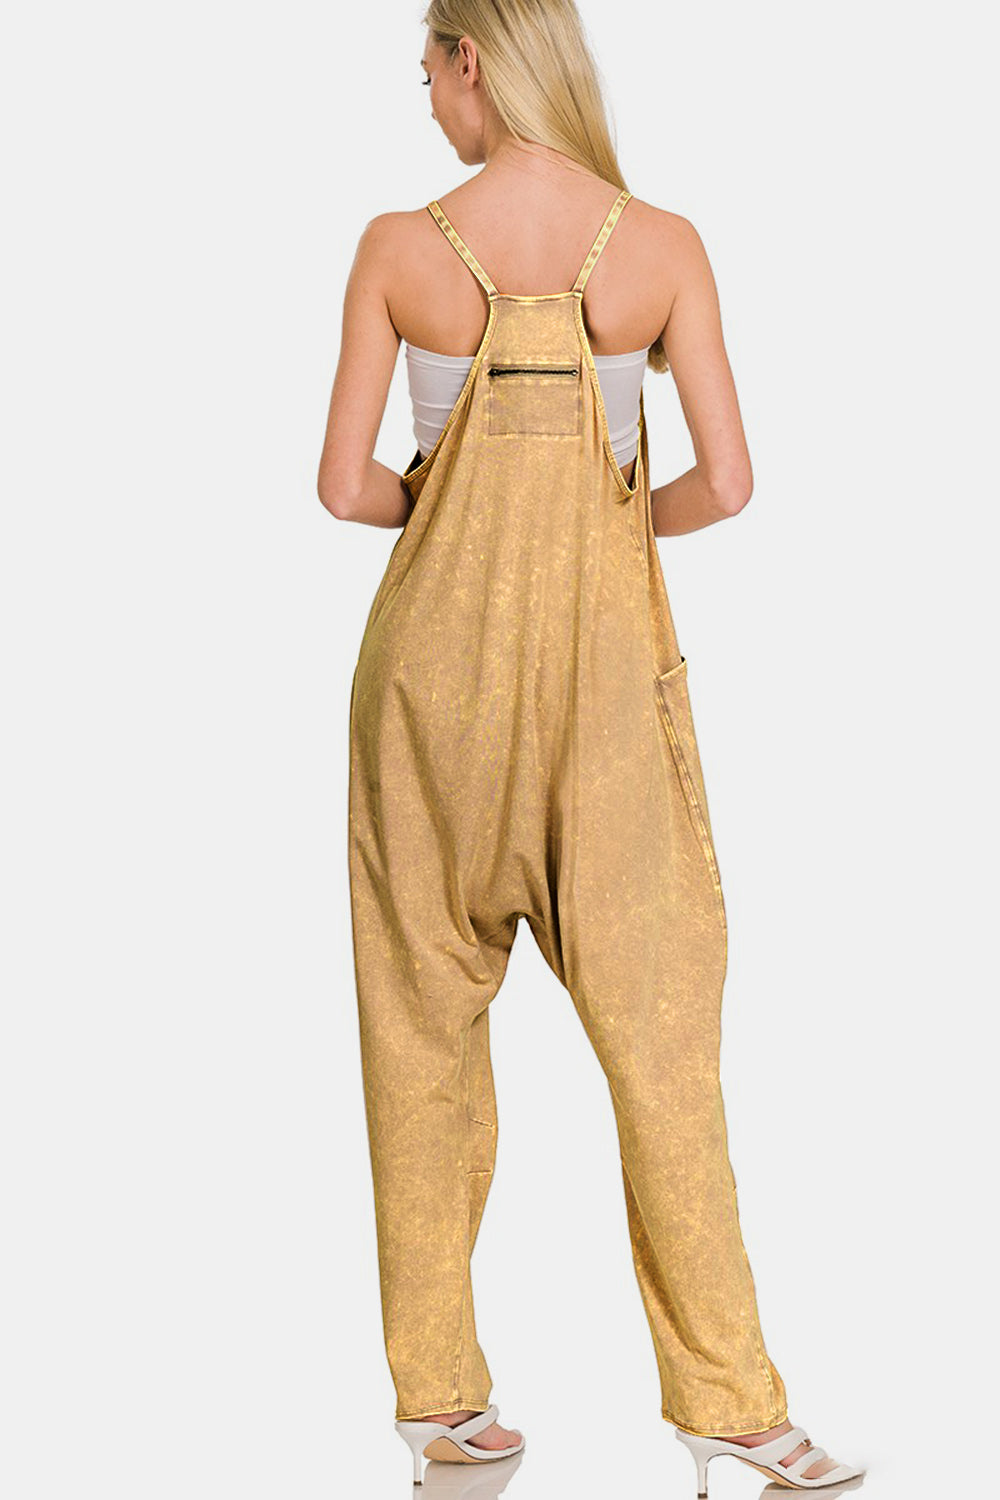 Zenana Spaghetti Strap Jumpsuit with Pockets - Three Bears Boutique